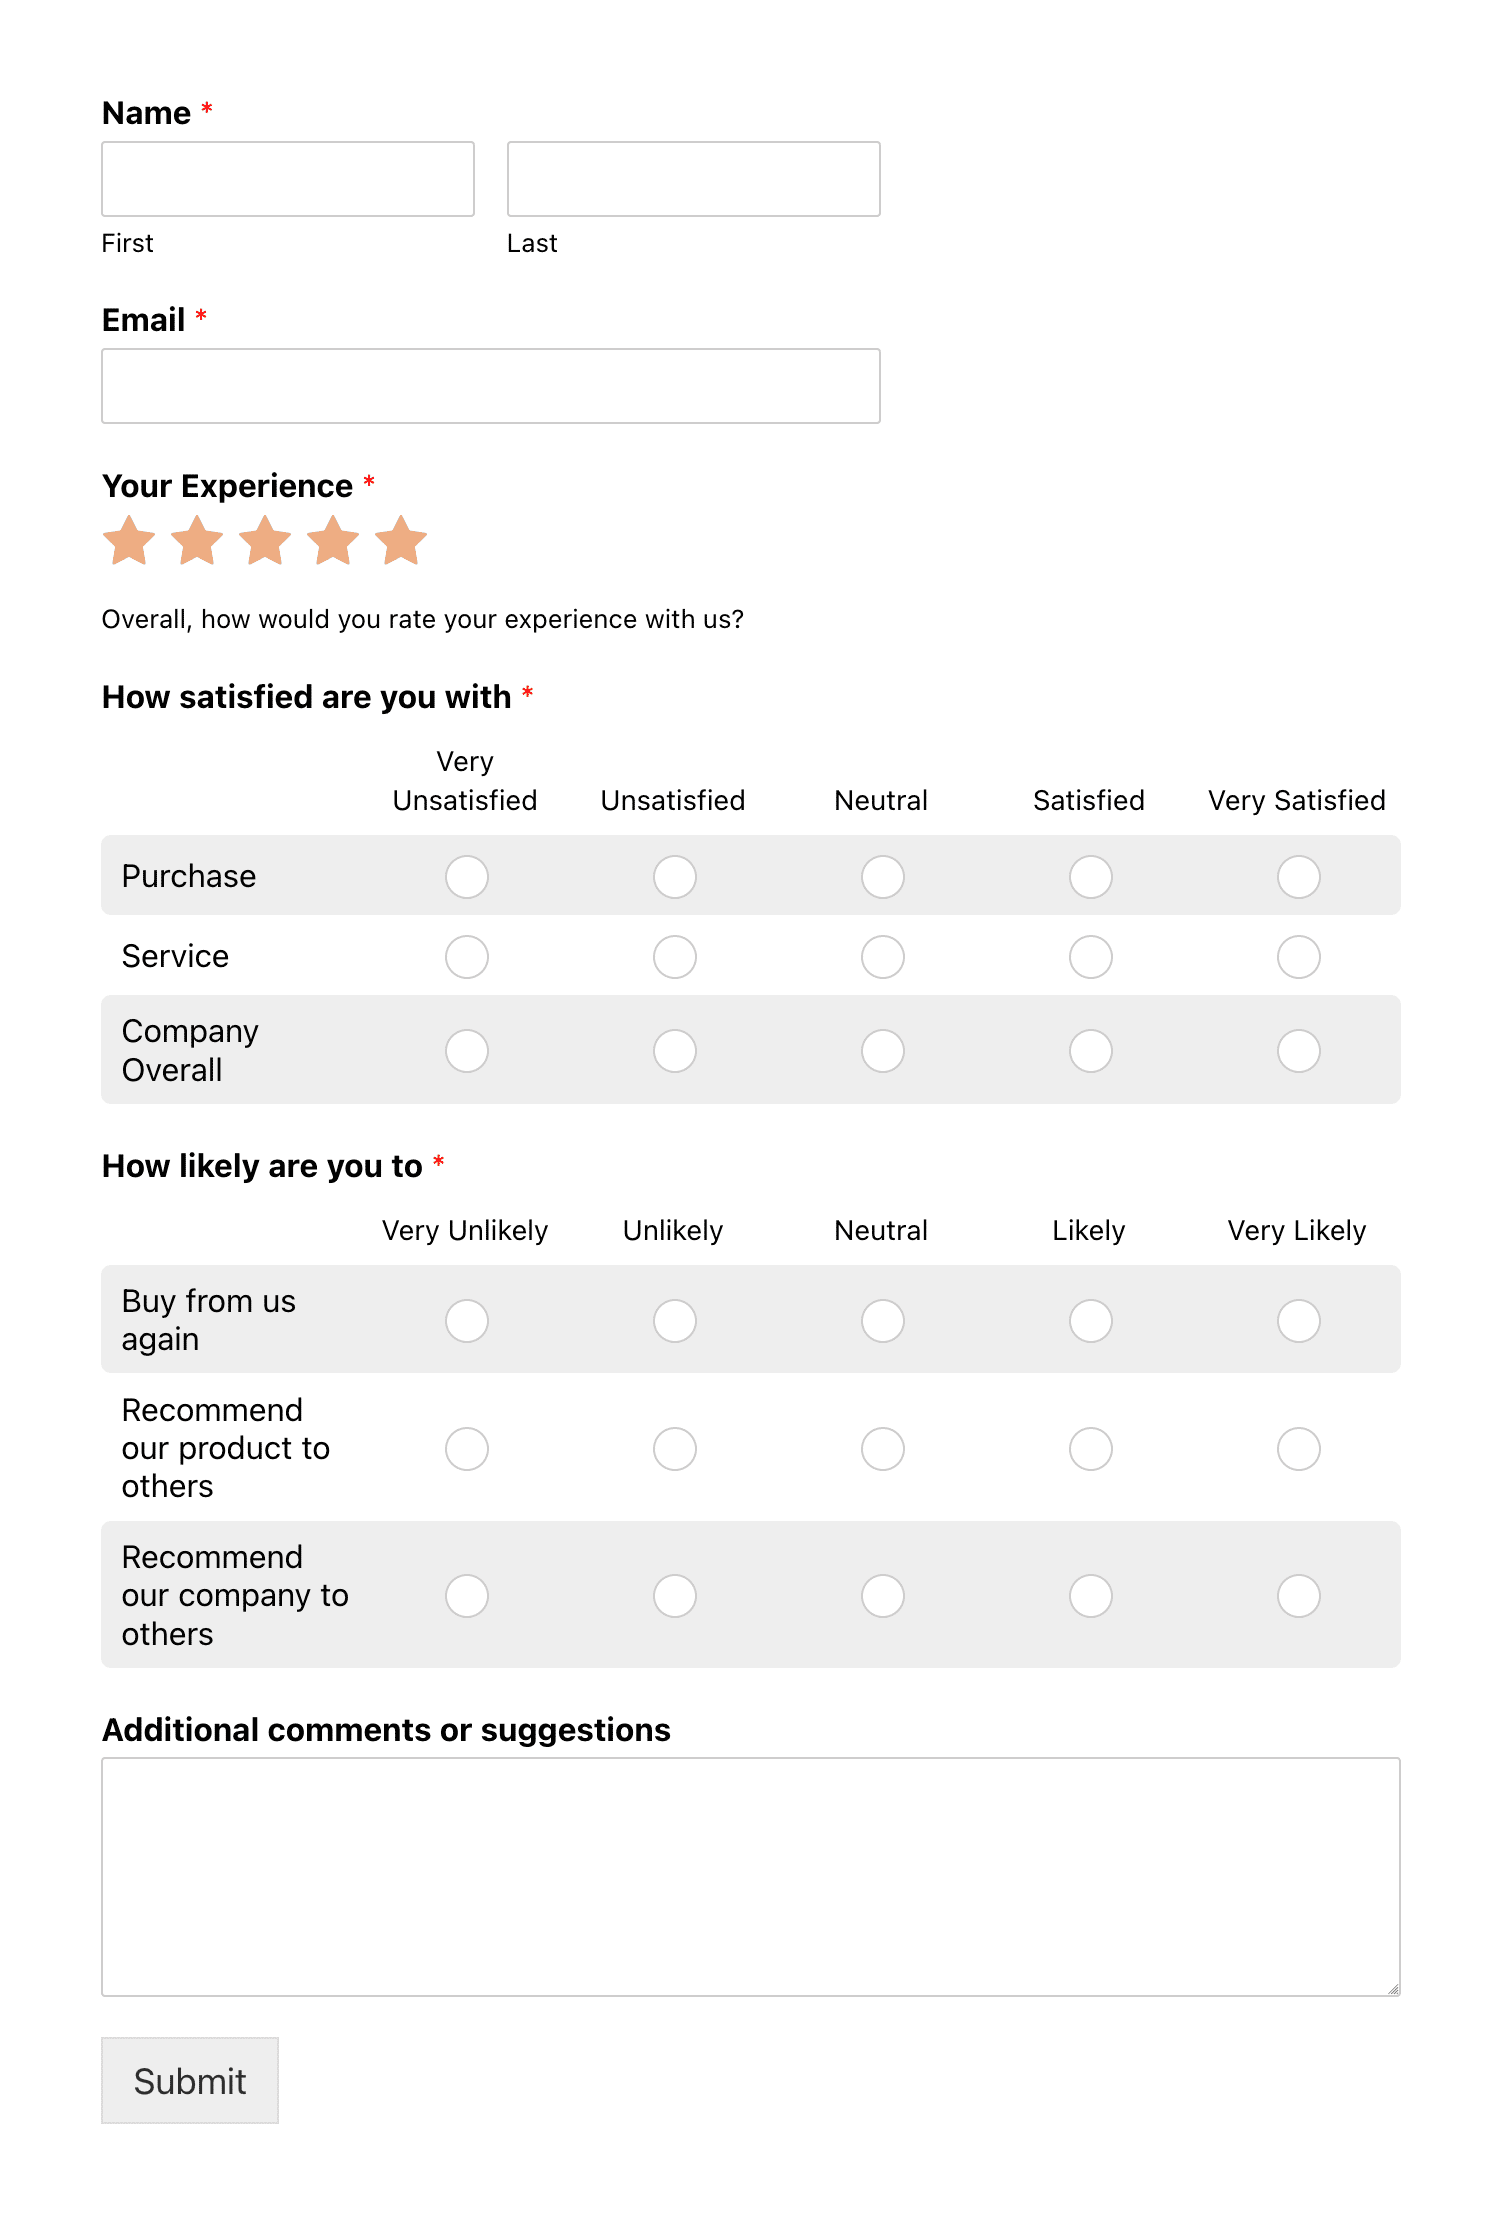 A survey form